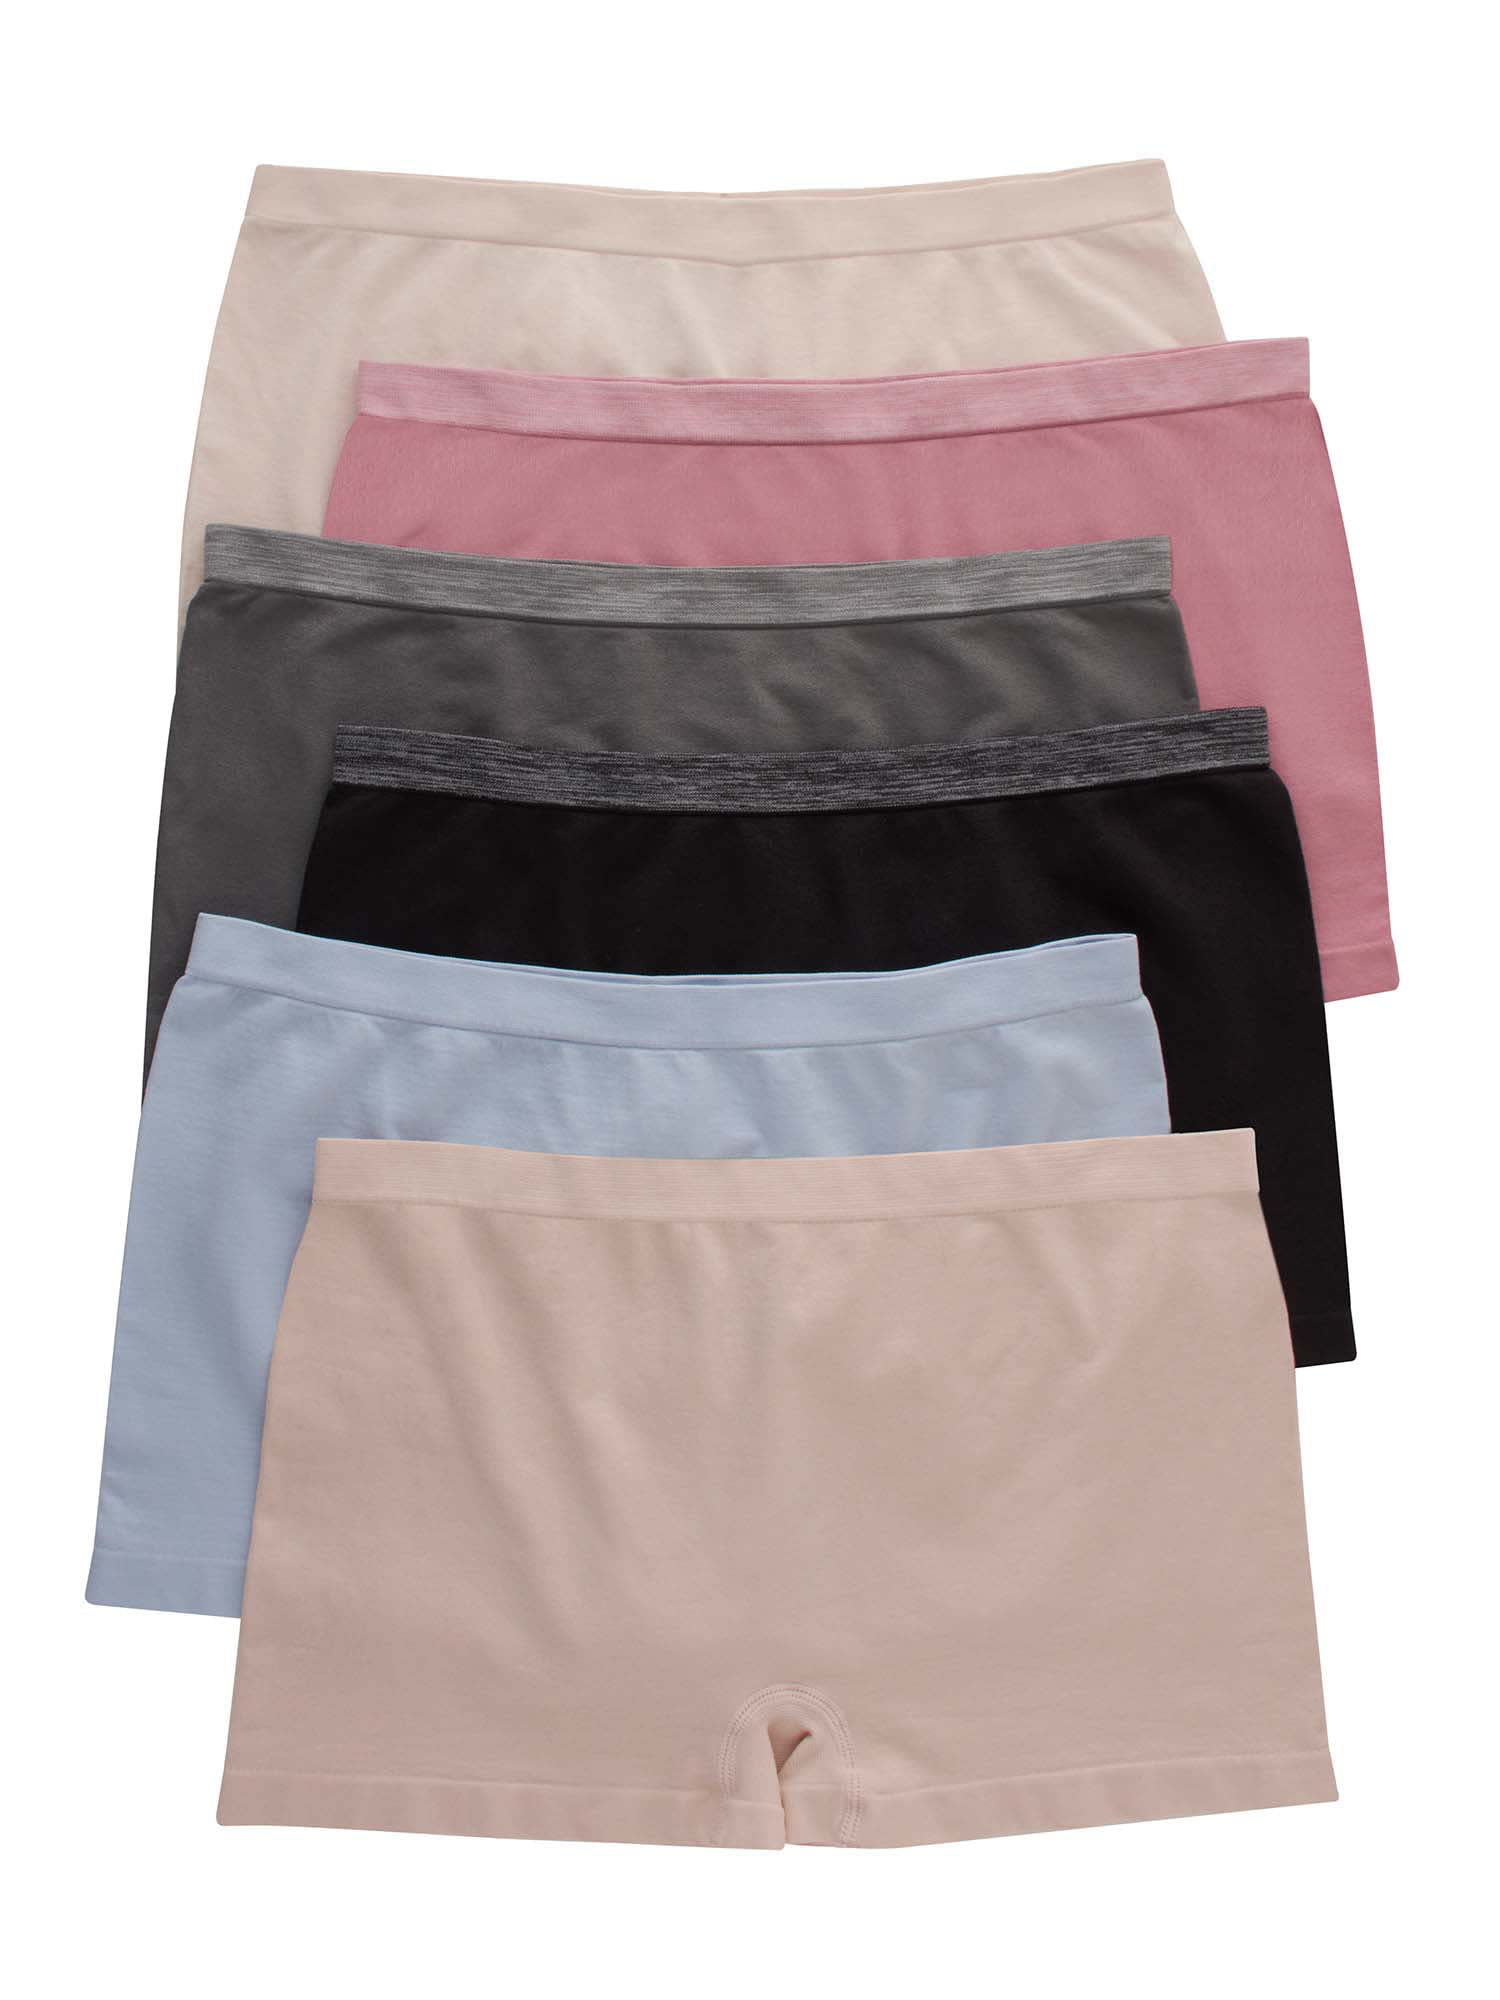 Hanes Women's Cotton Brief Panties 10 Pack 